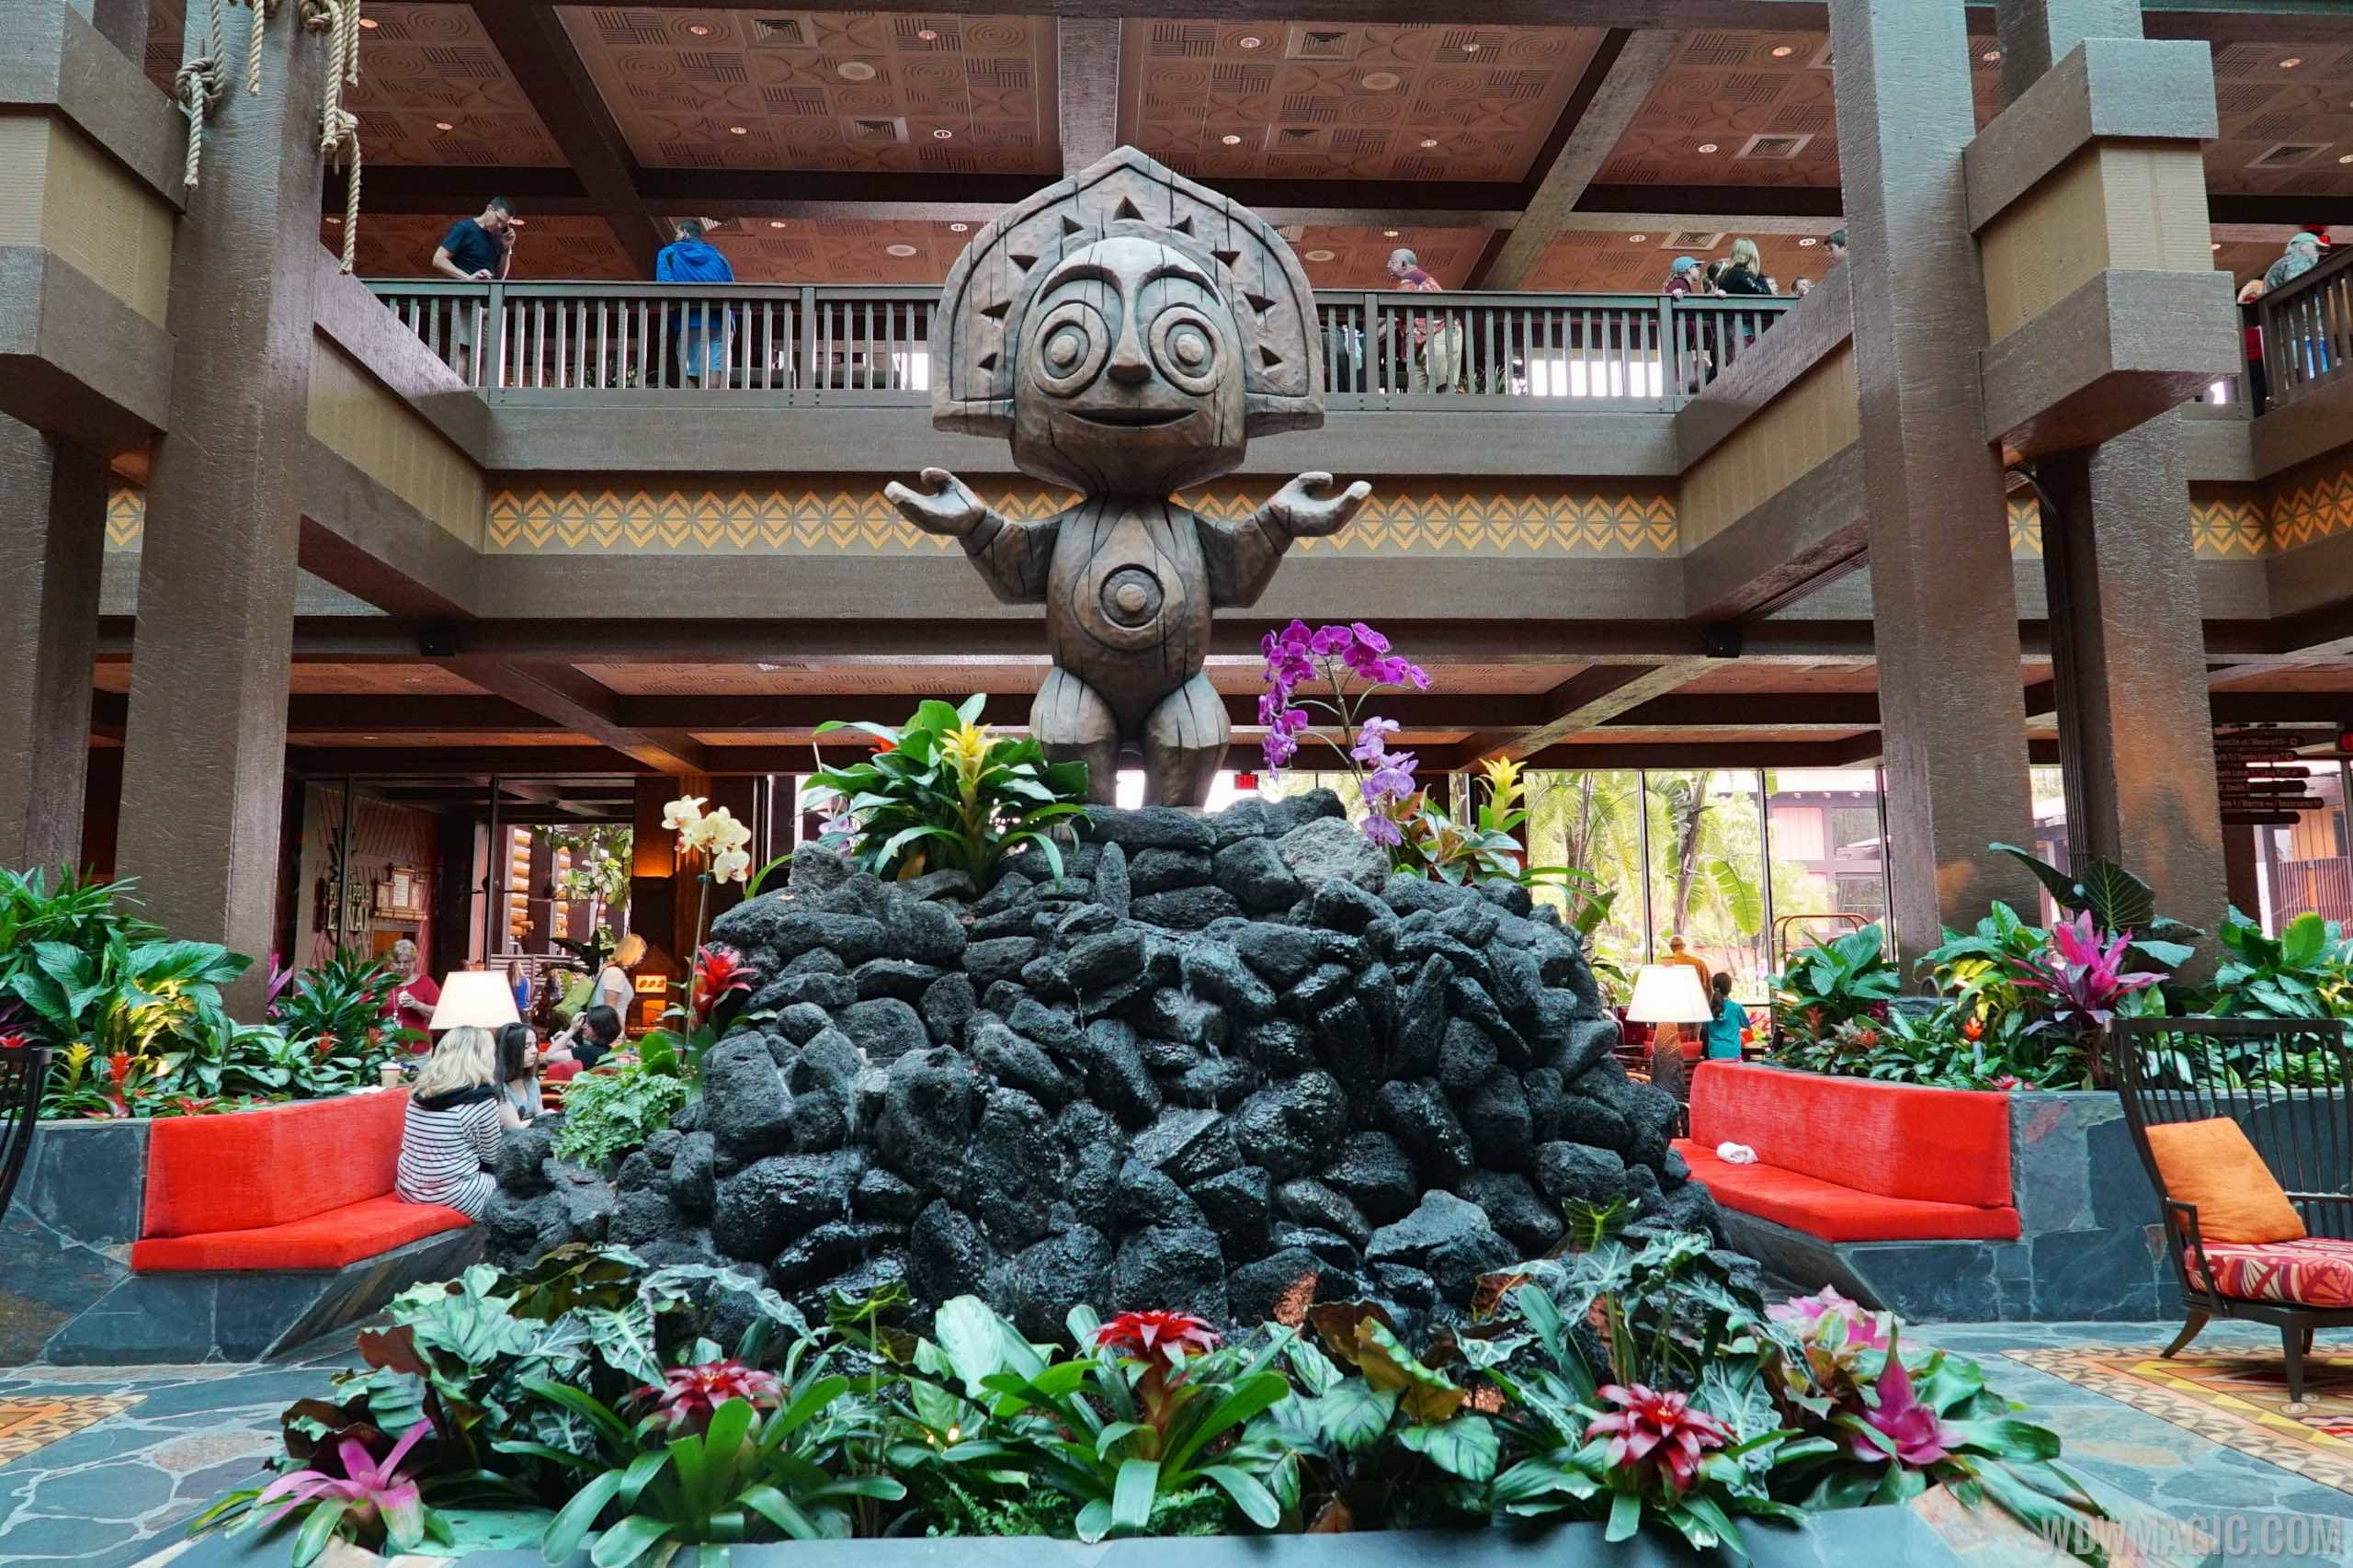 Tiki statue completes Polynesian lobby